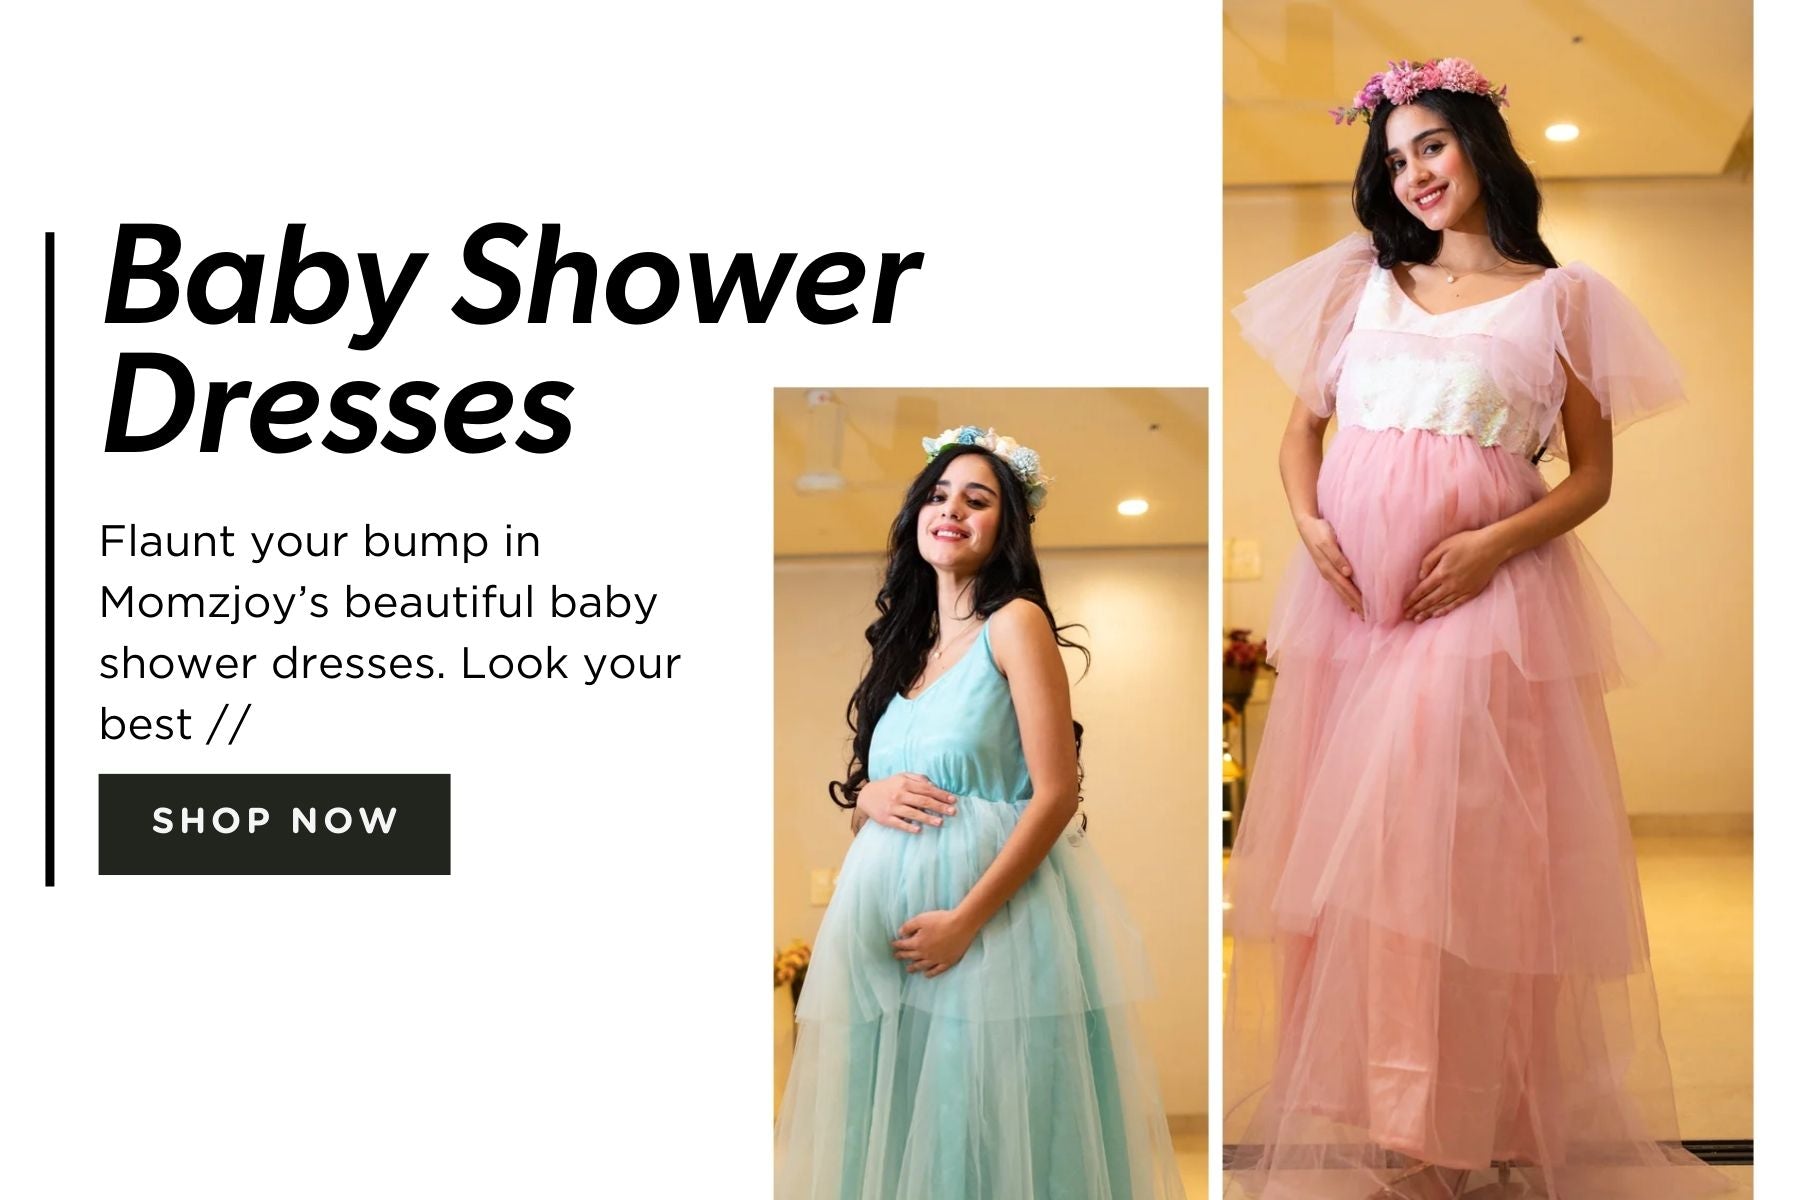 Buy MomToBe Purple Maternity Dress for Women's Online @ Tata CLiQ